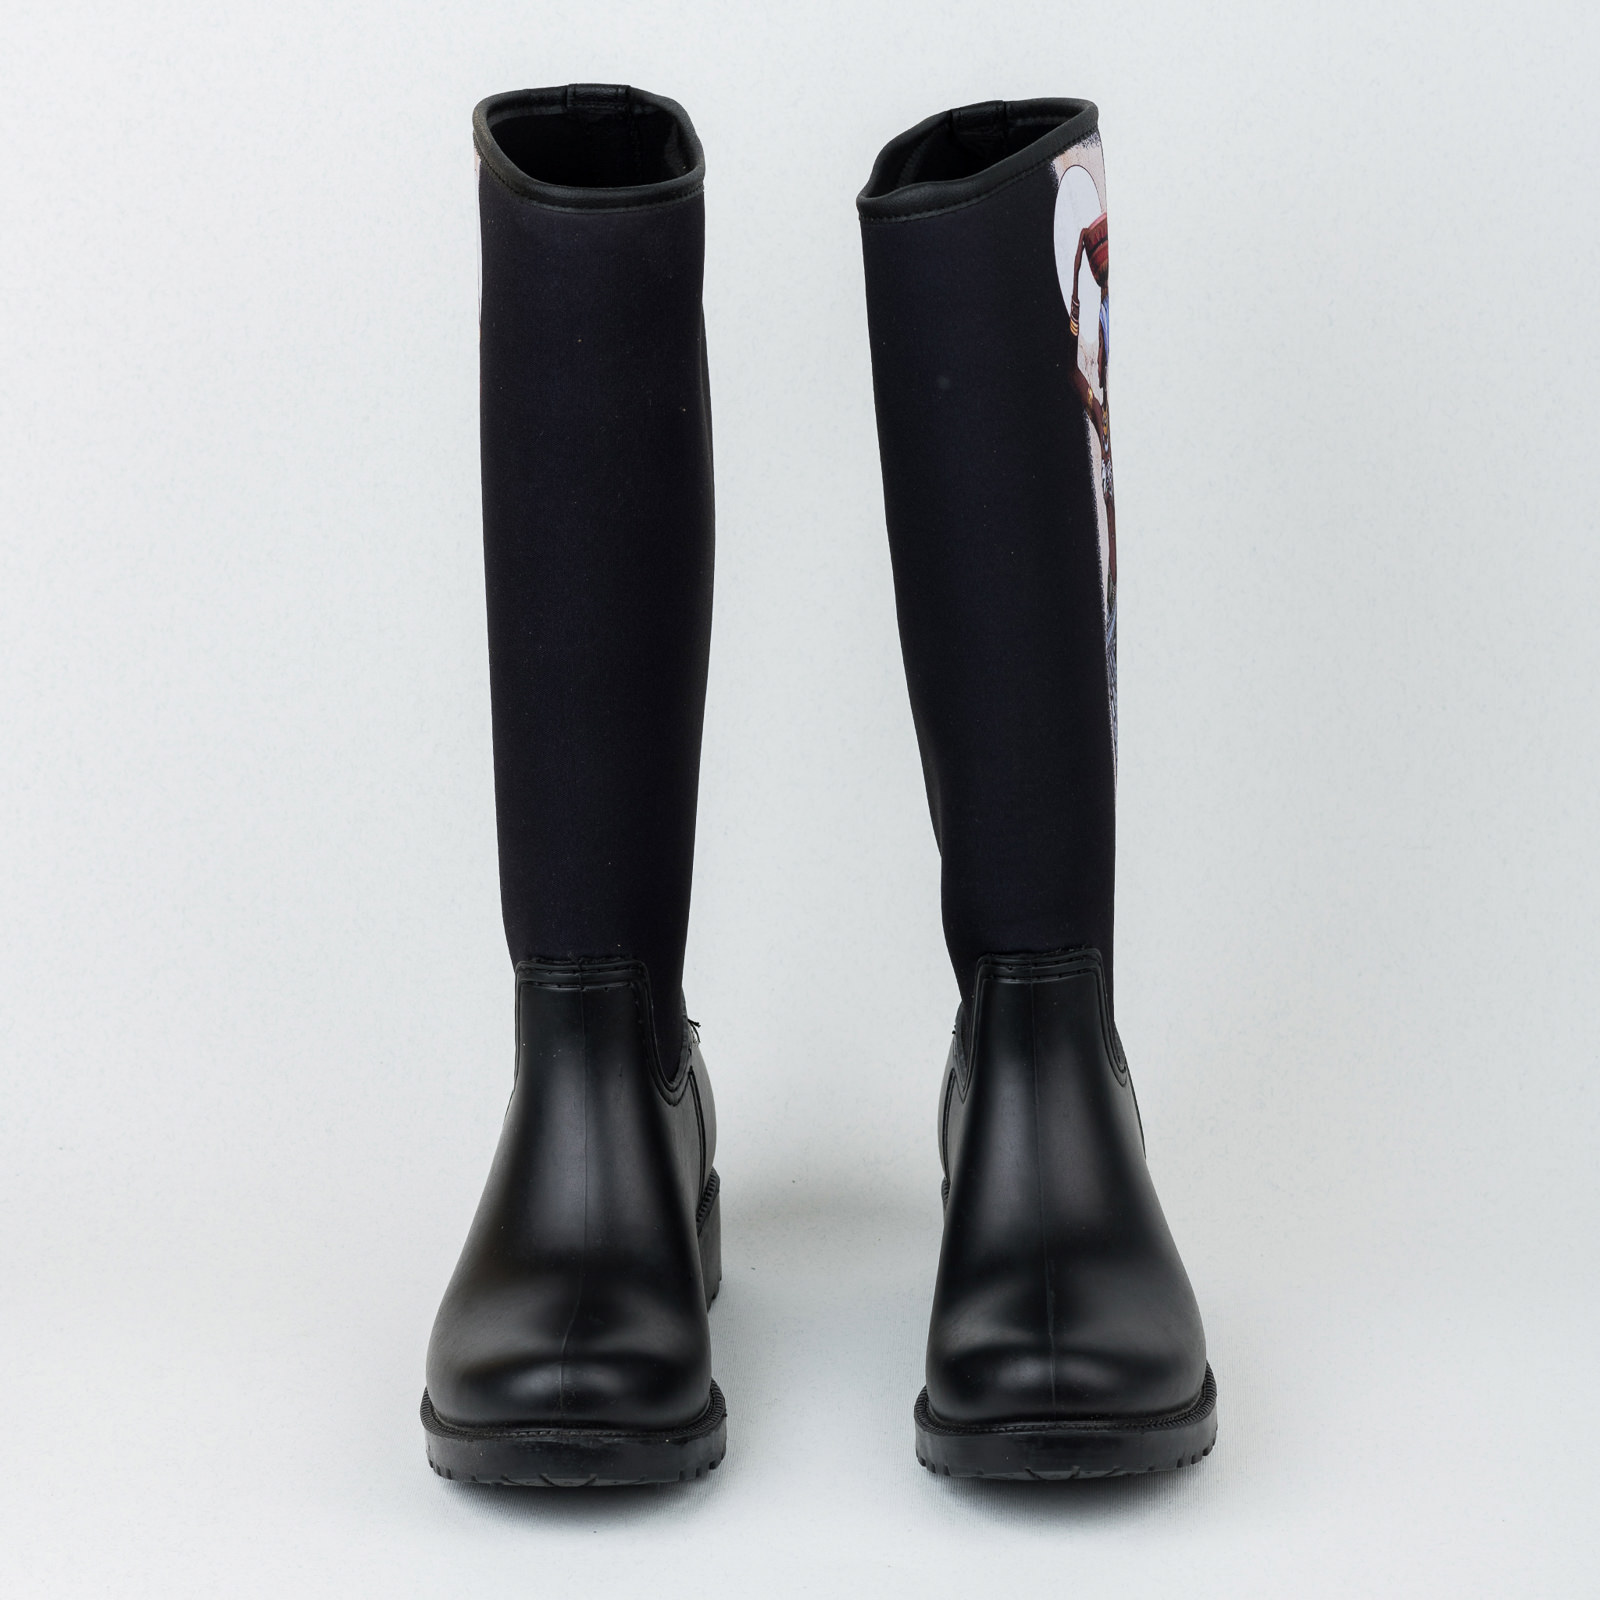 Waterproof boots B577 - BLACK